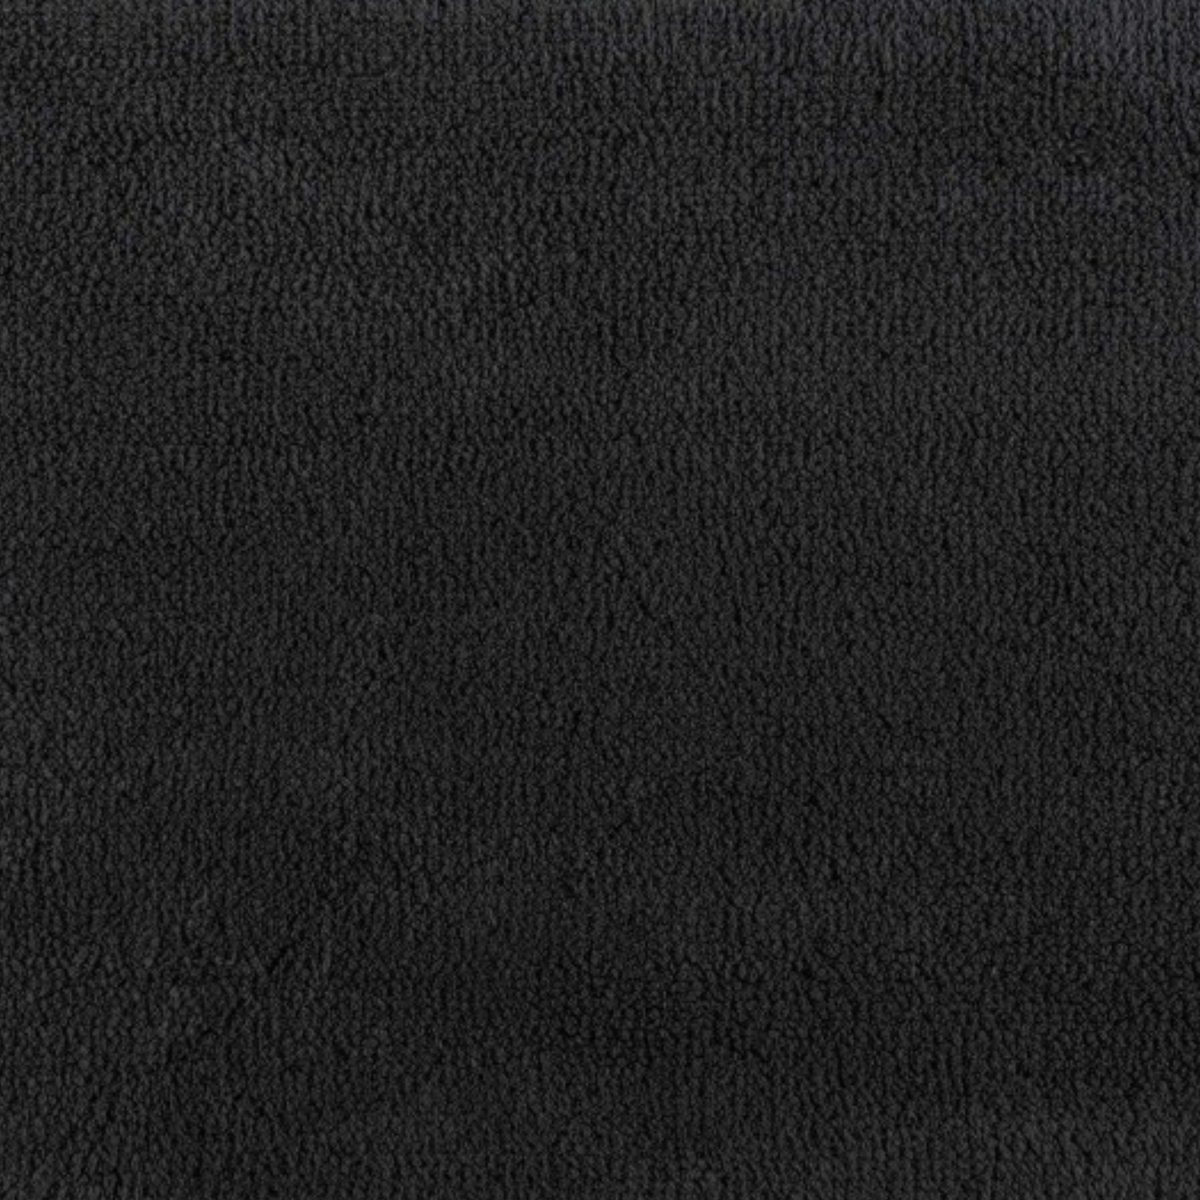 Fabric Closeup of Graccioza Cool Bath Rugs Black Color